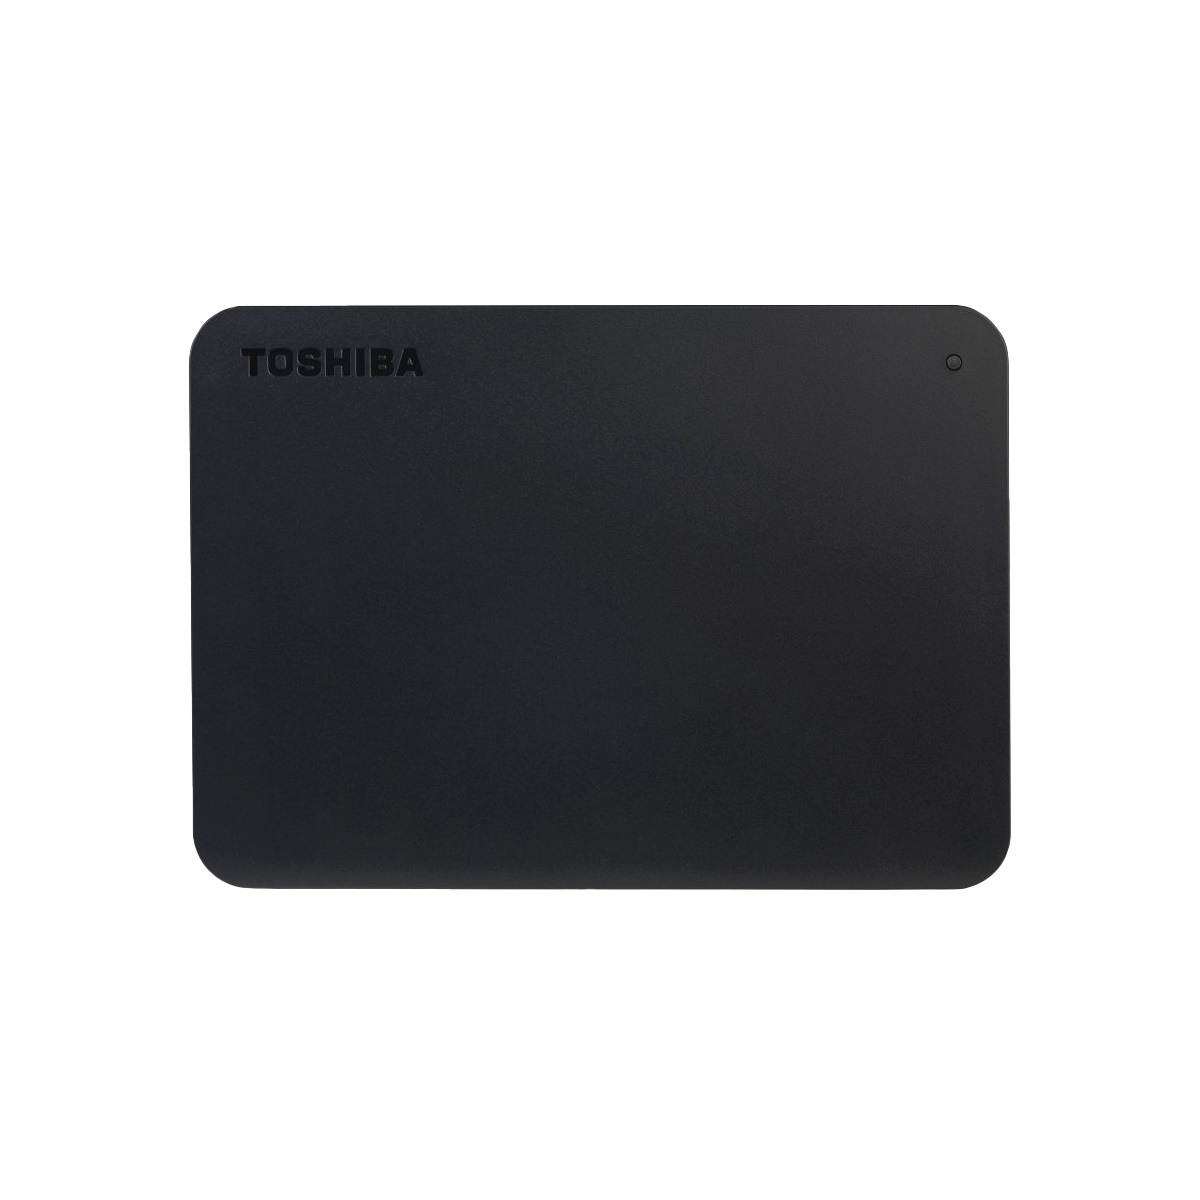 Toshiba HD